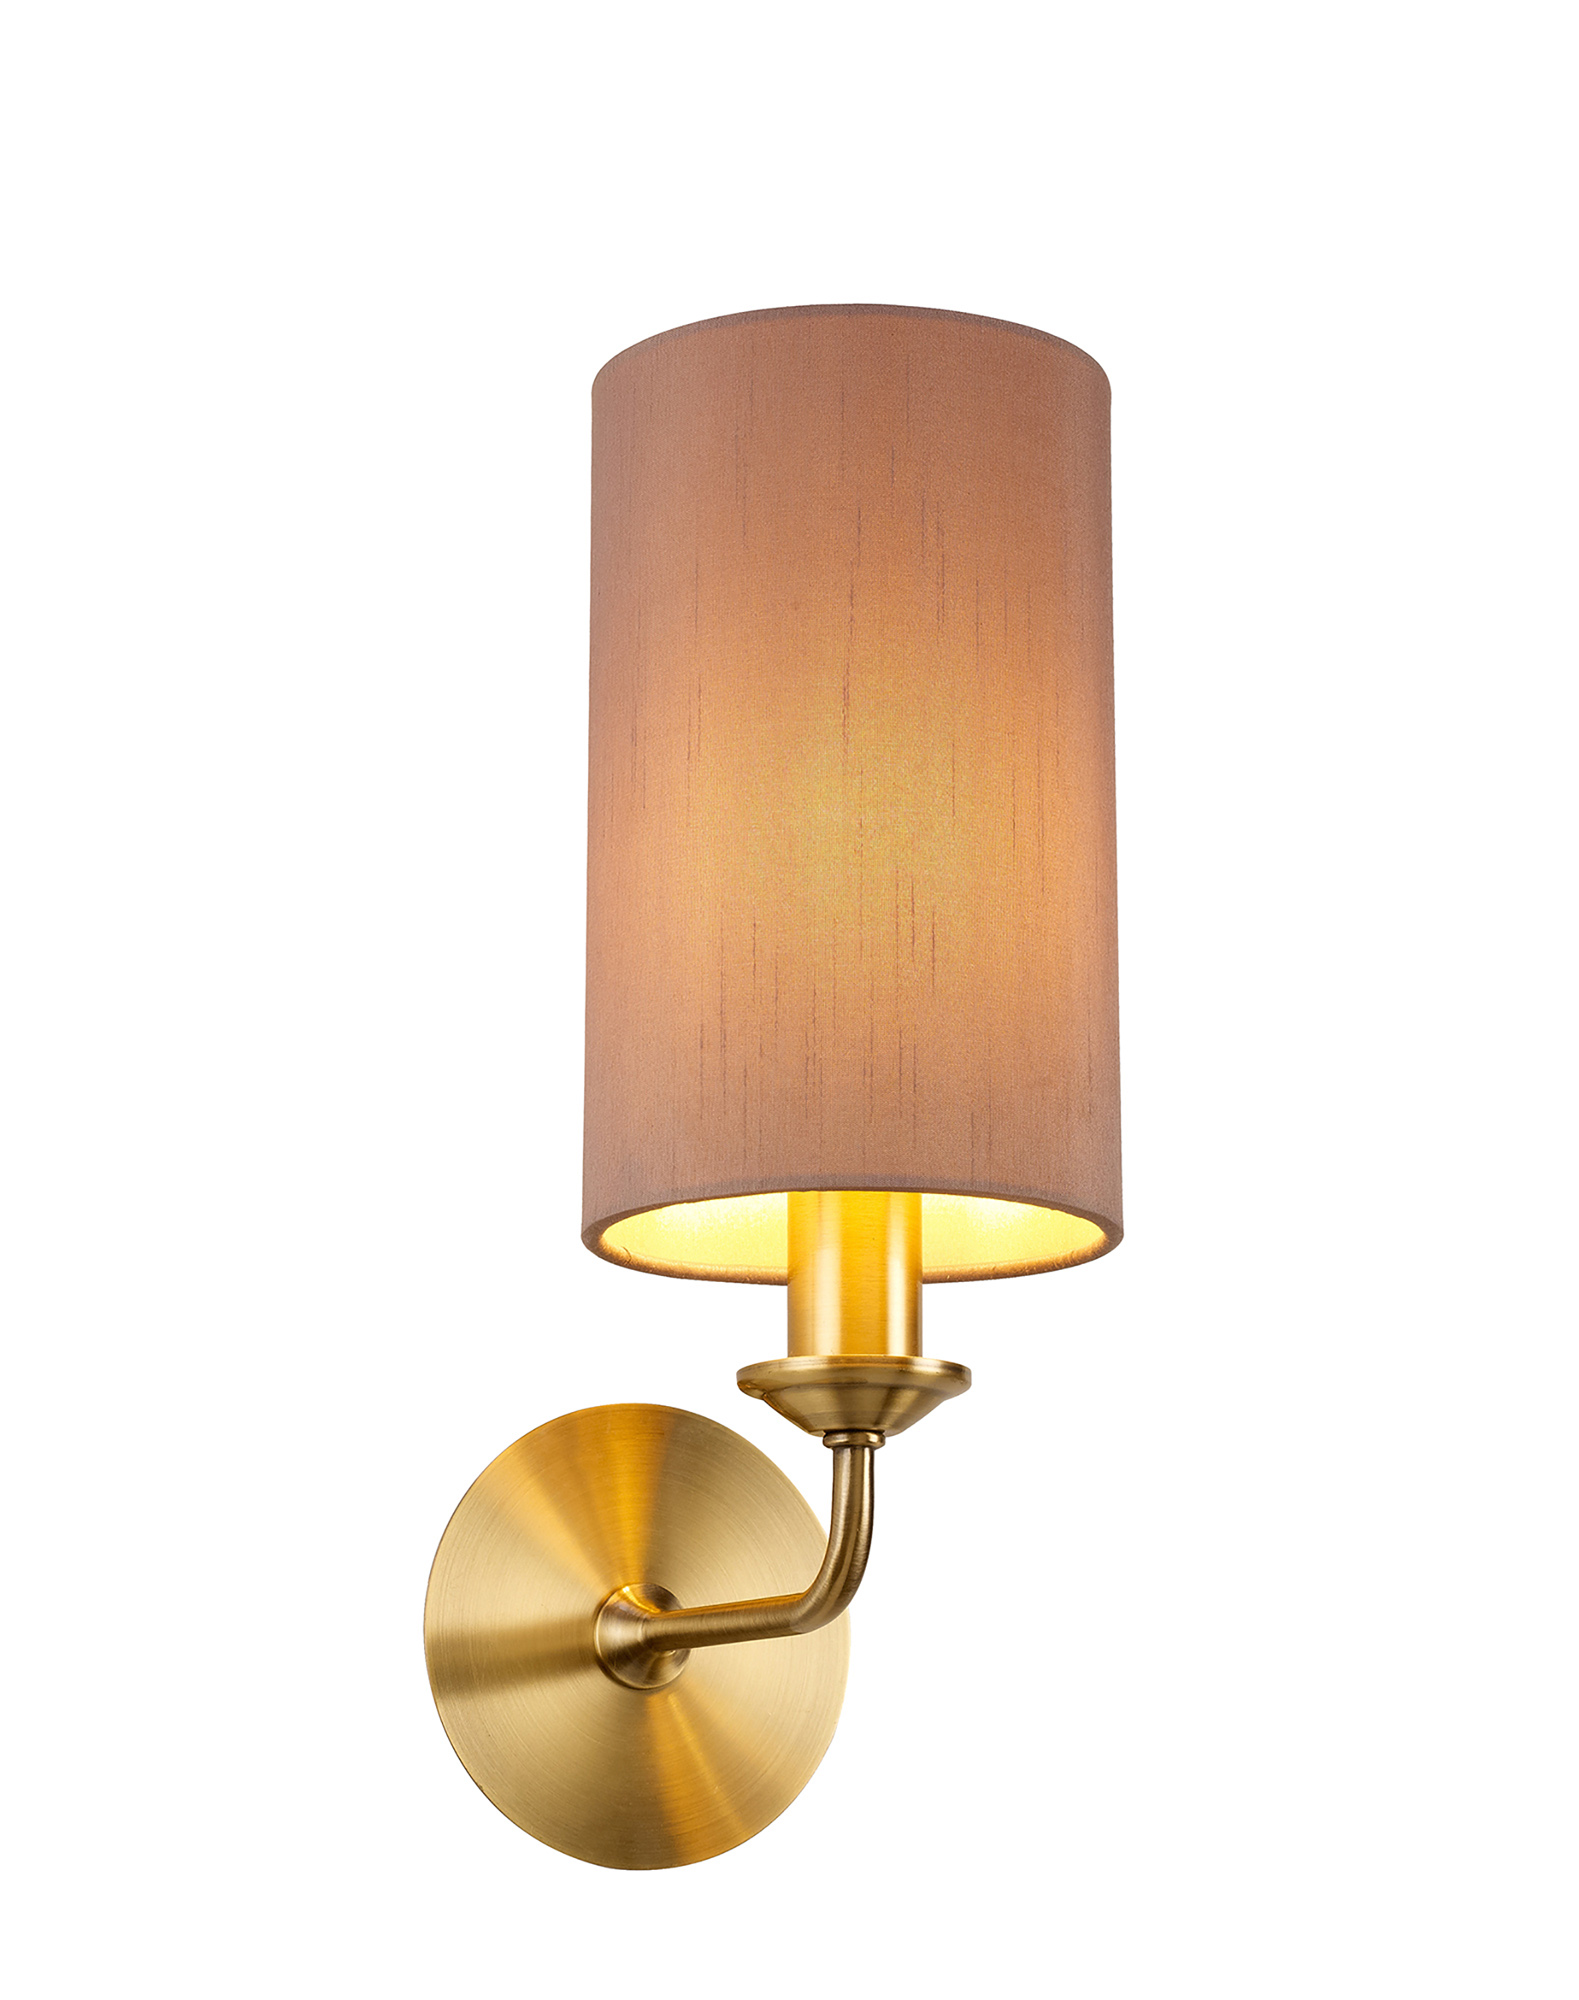 DK0044  Banyan Wall Lamp 1 Light Antique Brass, Taupe/Halo Gold